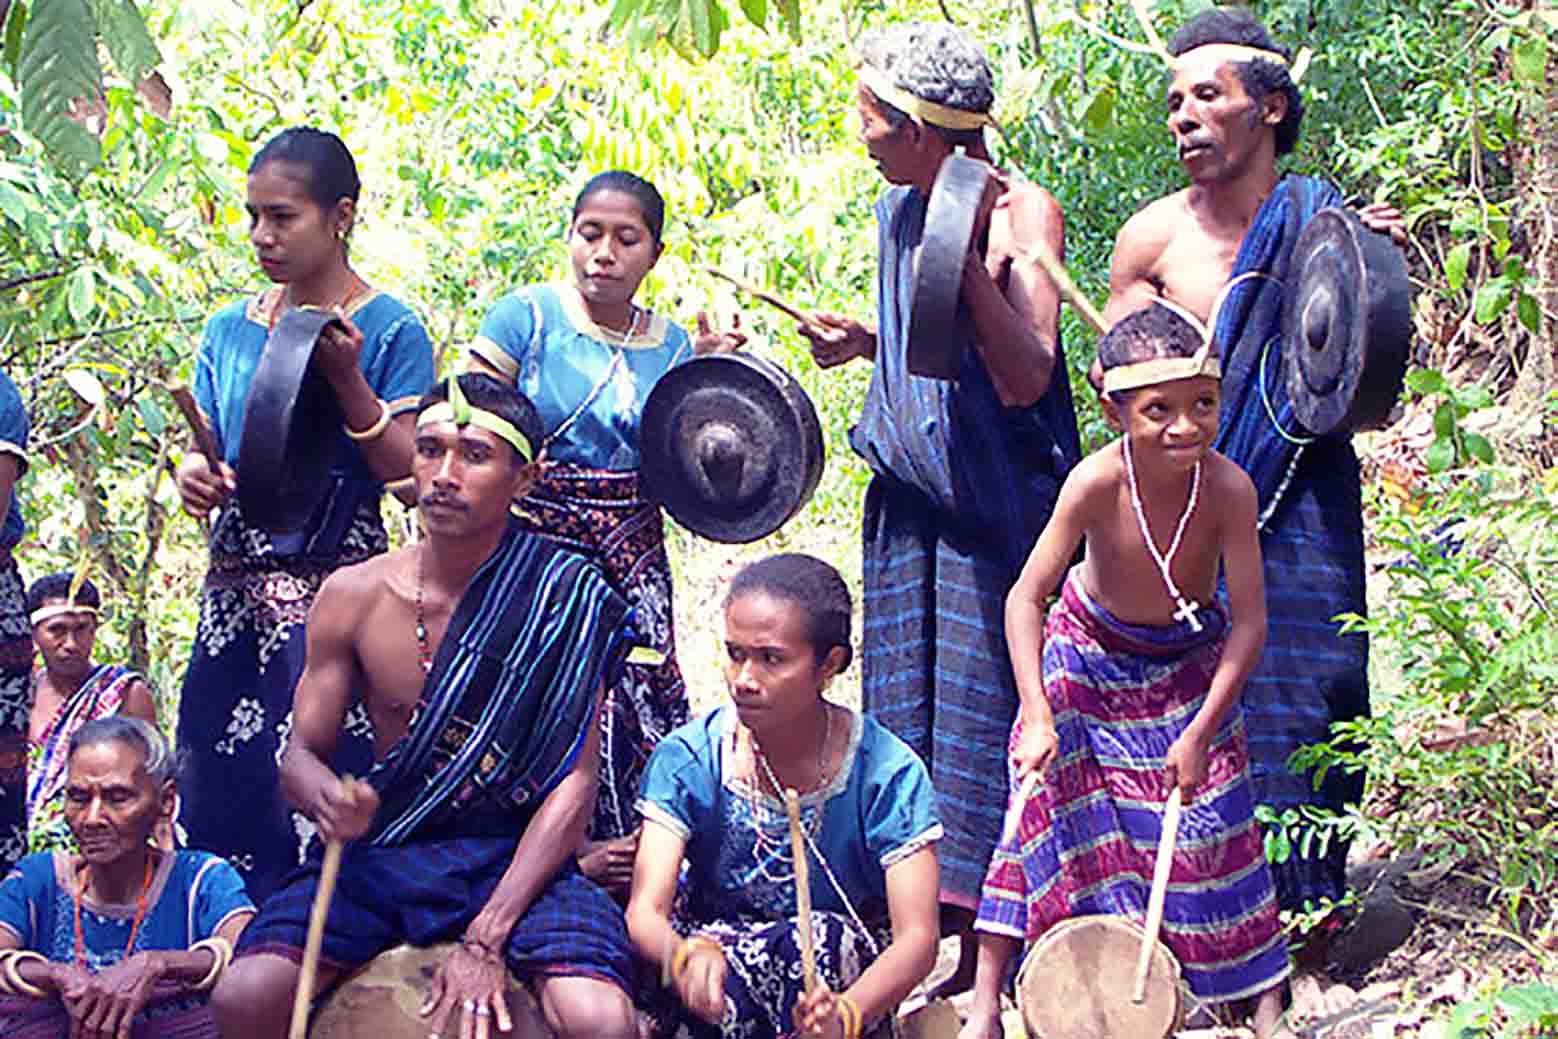 Gong Waning, Alat Musik Tradisional Khas Nusa Tenggara Timur (NTT)